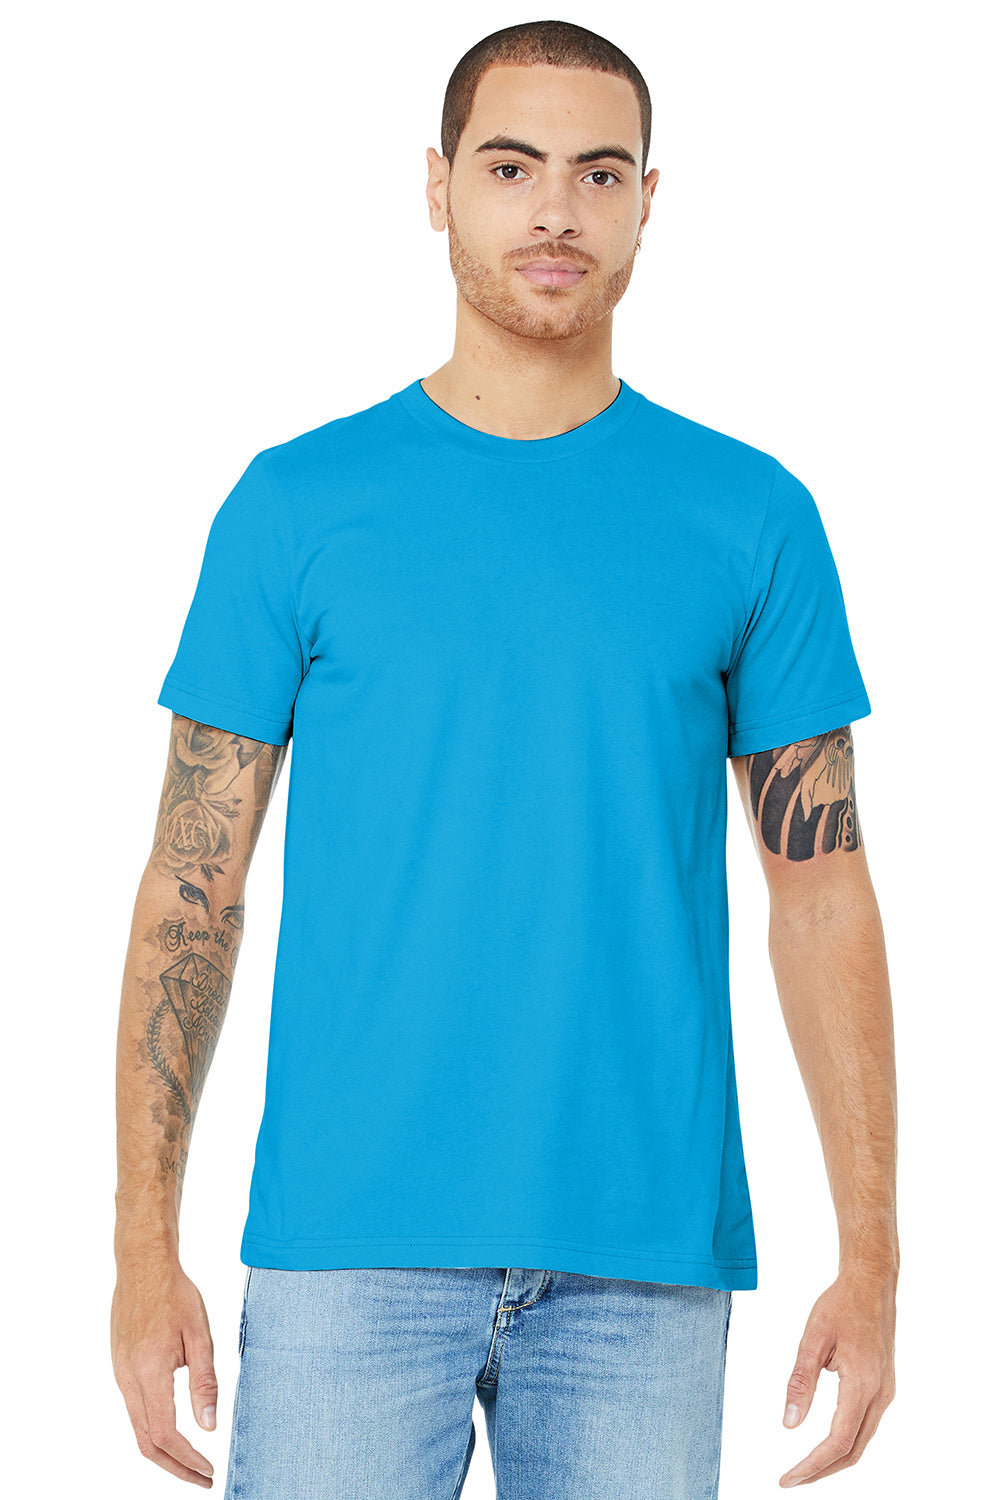 Bella + Canvas BC3001/3001C Mens Jersey Short Sleeve Crewneck T-Shirt Turquoise Blue Model Front